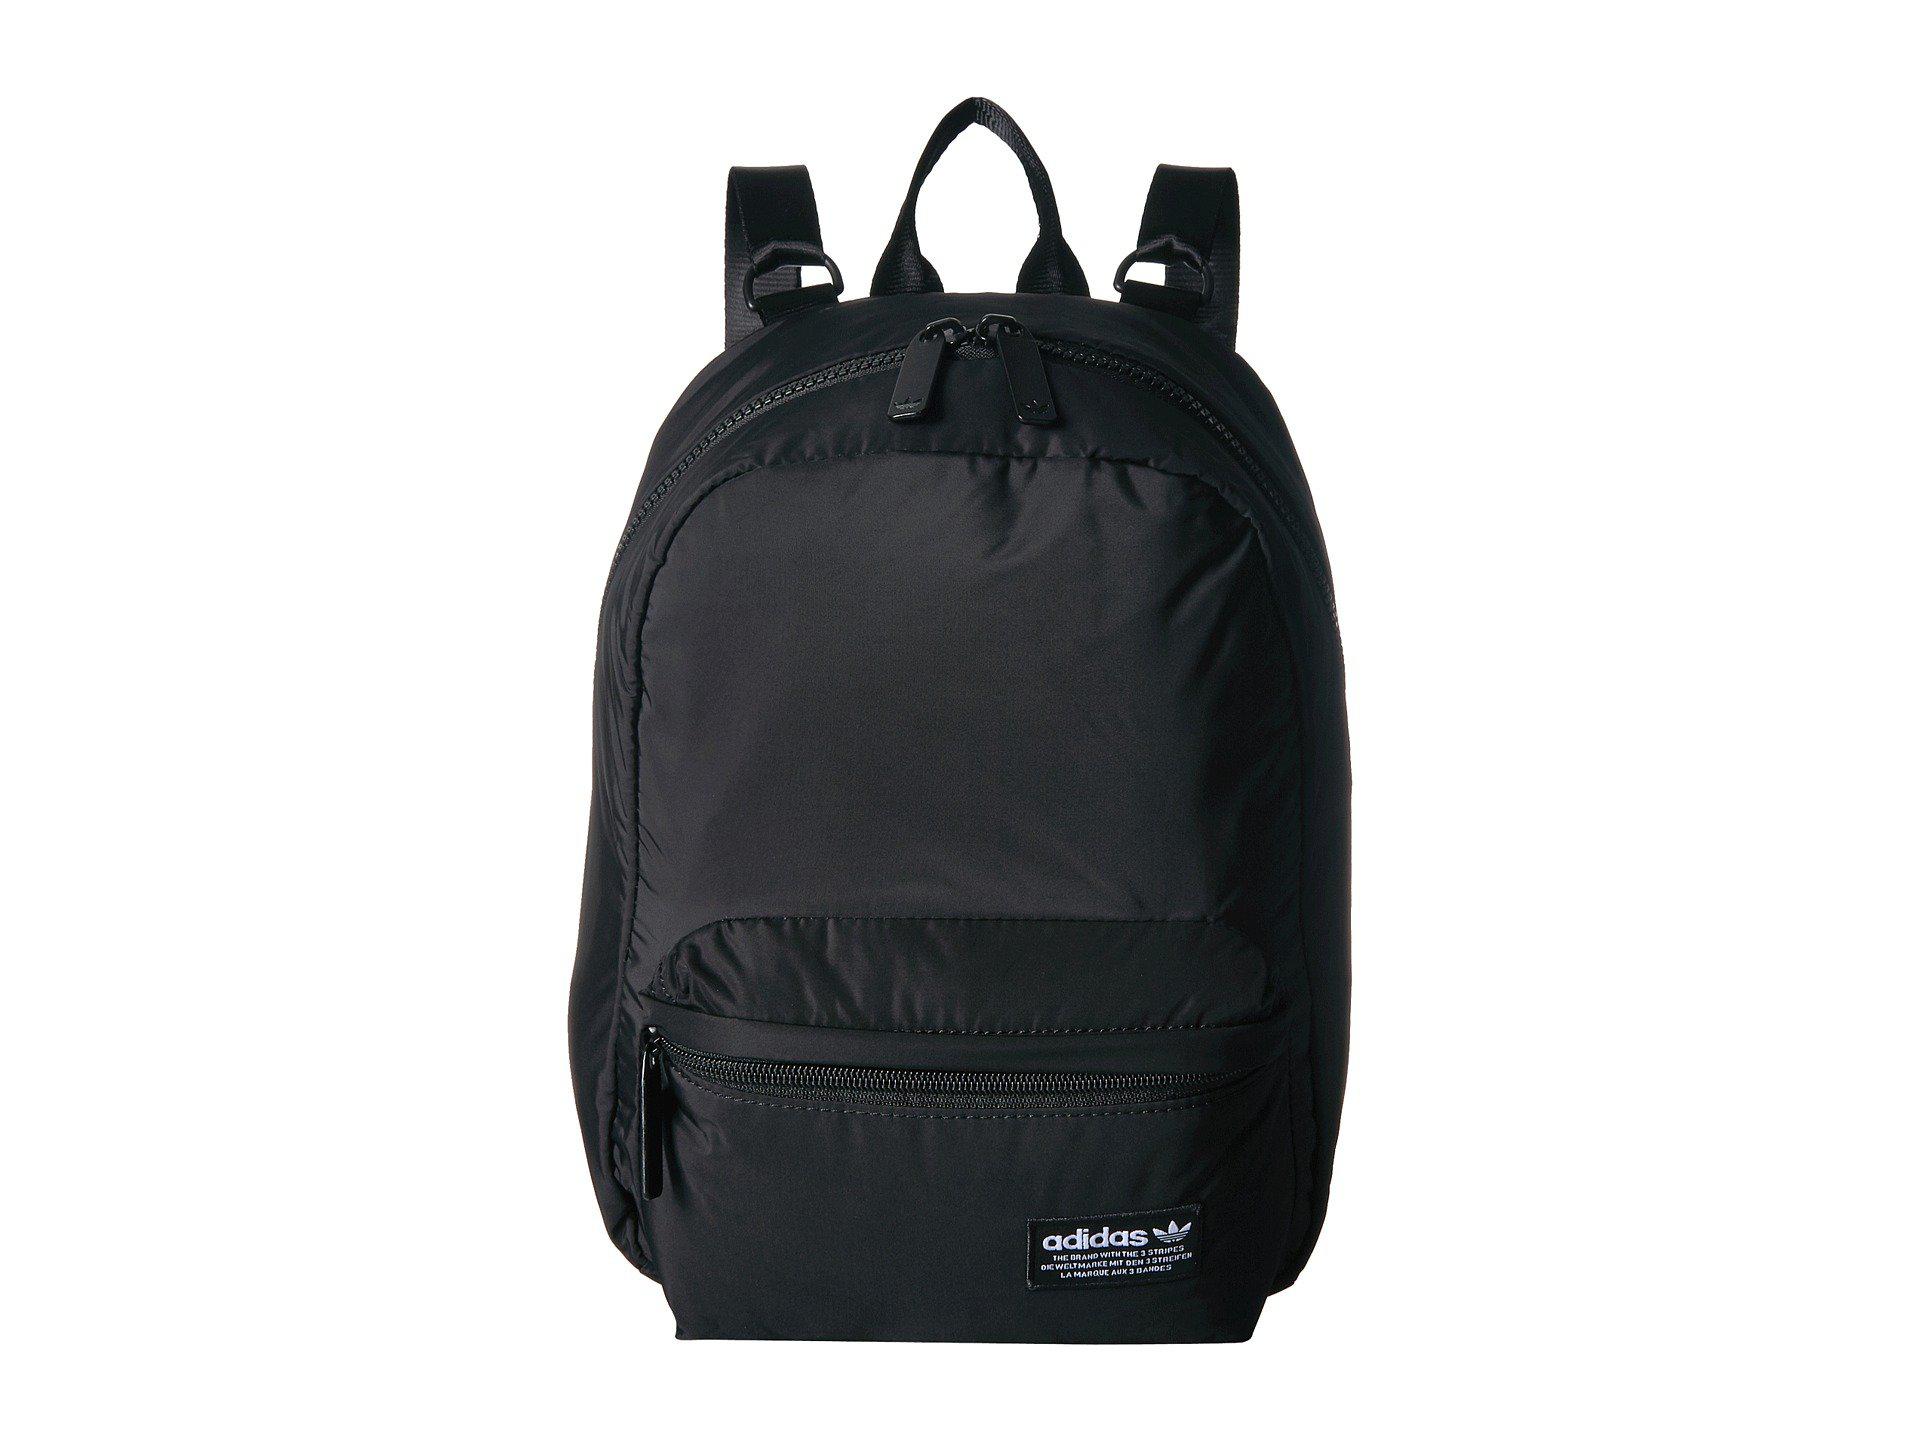 adidas compact backpack